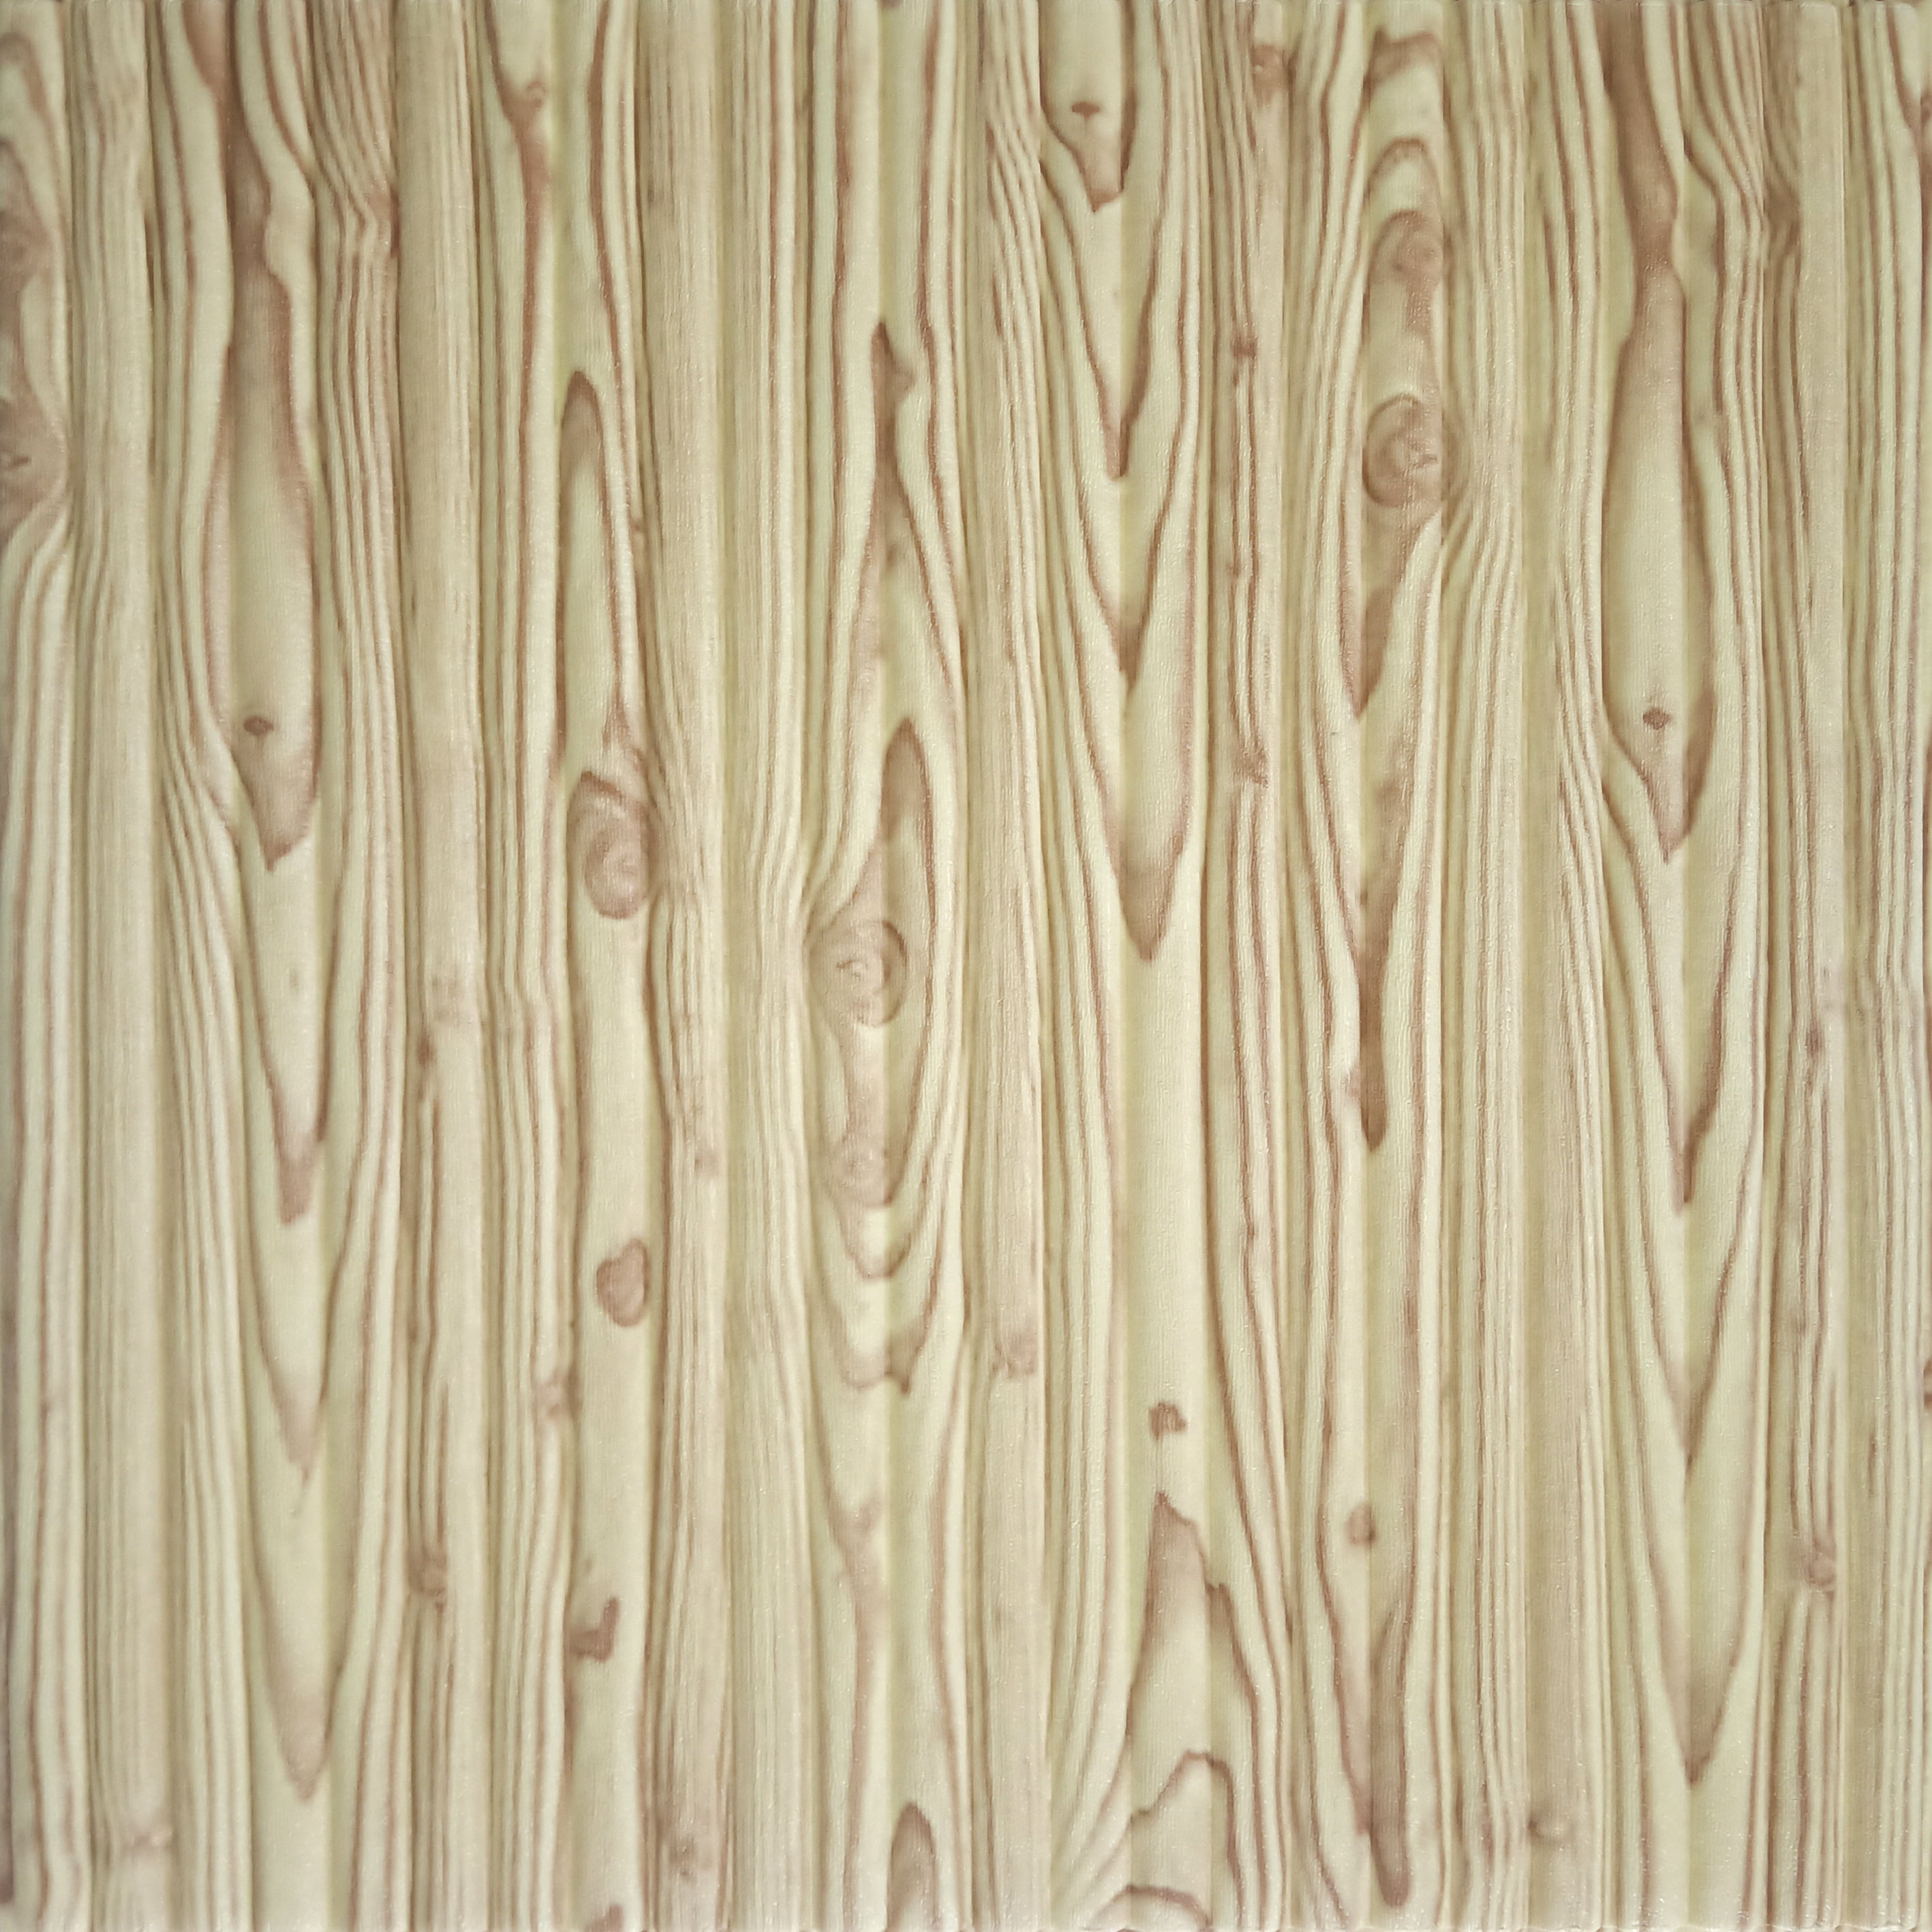 2.3*2.3ft Self-adhesive Waterproof 3D Wood Grain Wall Sticker Home Decor